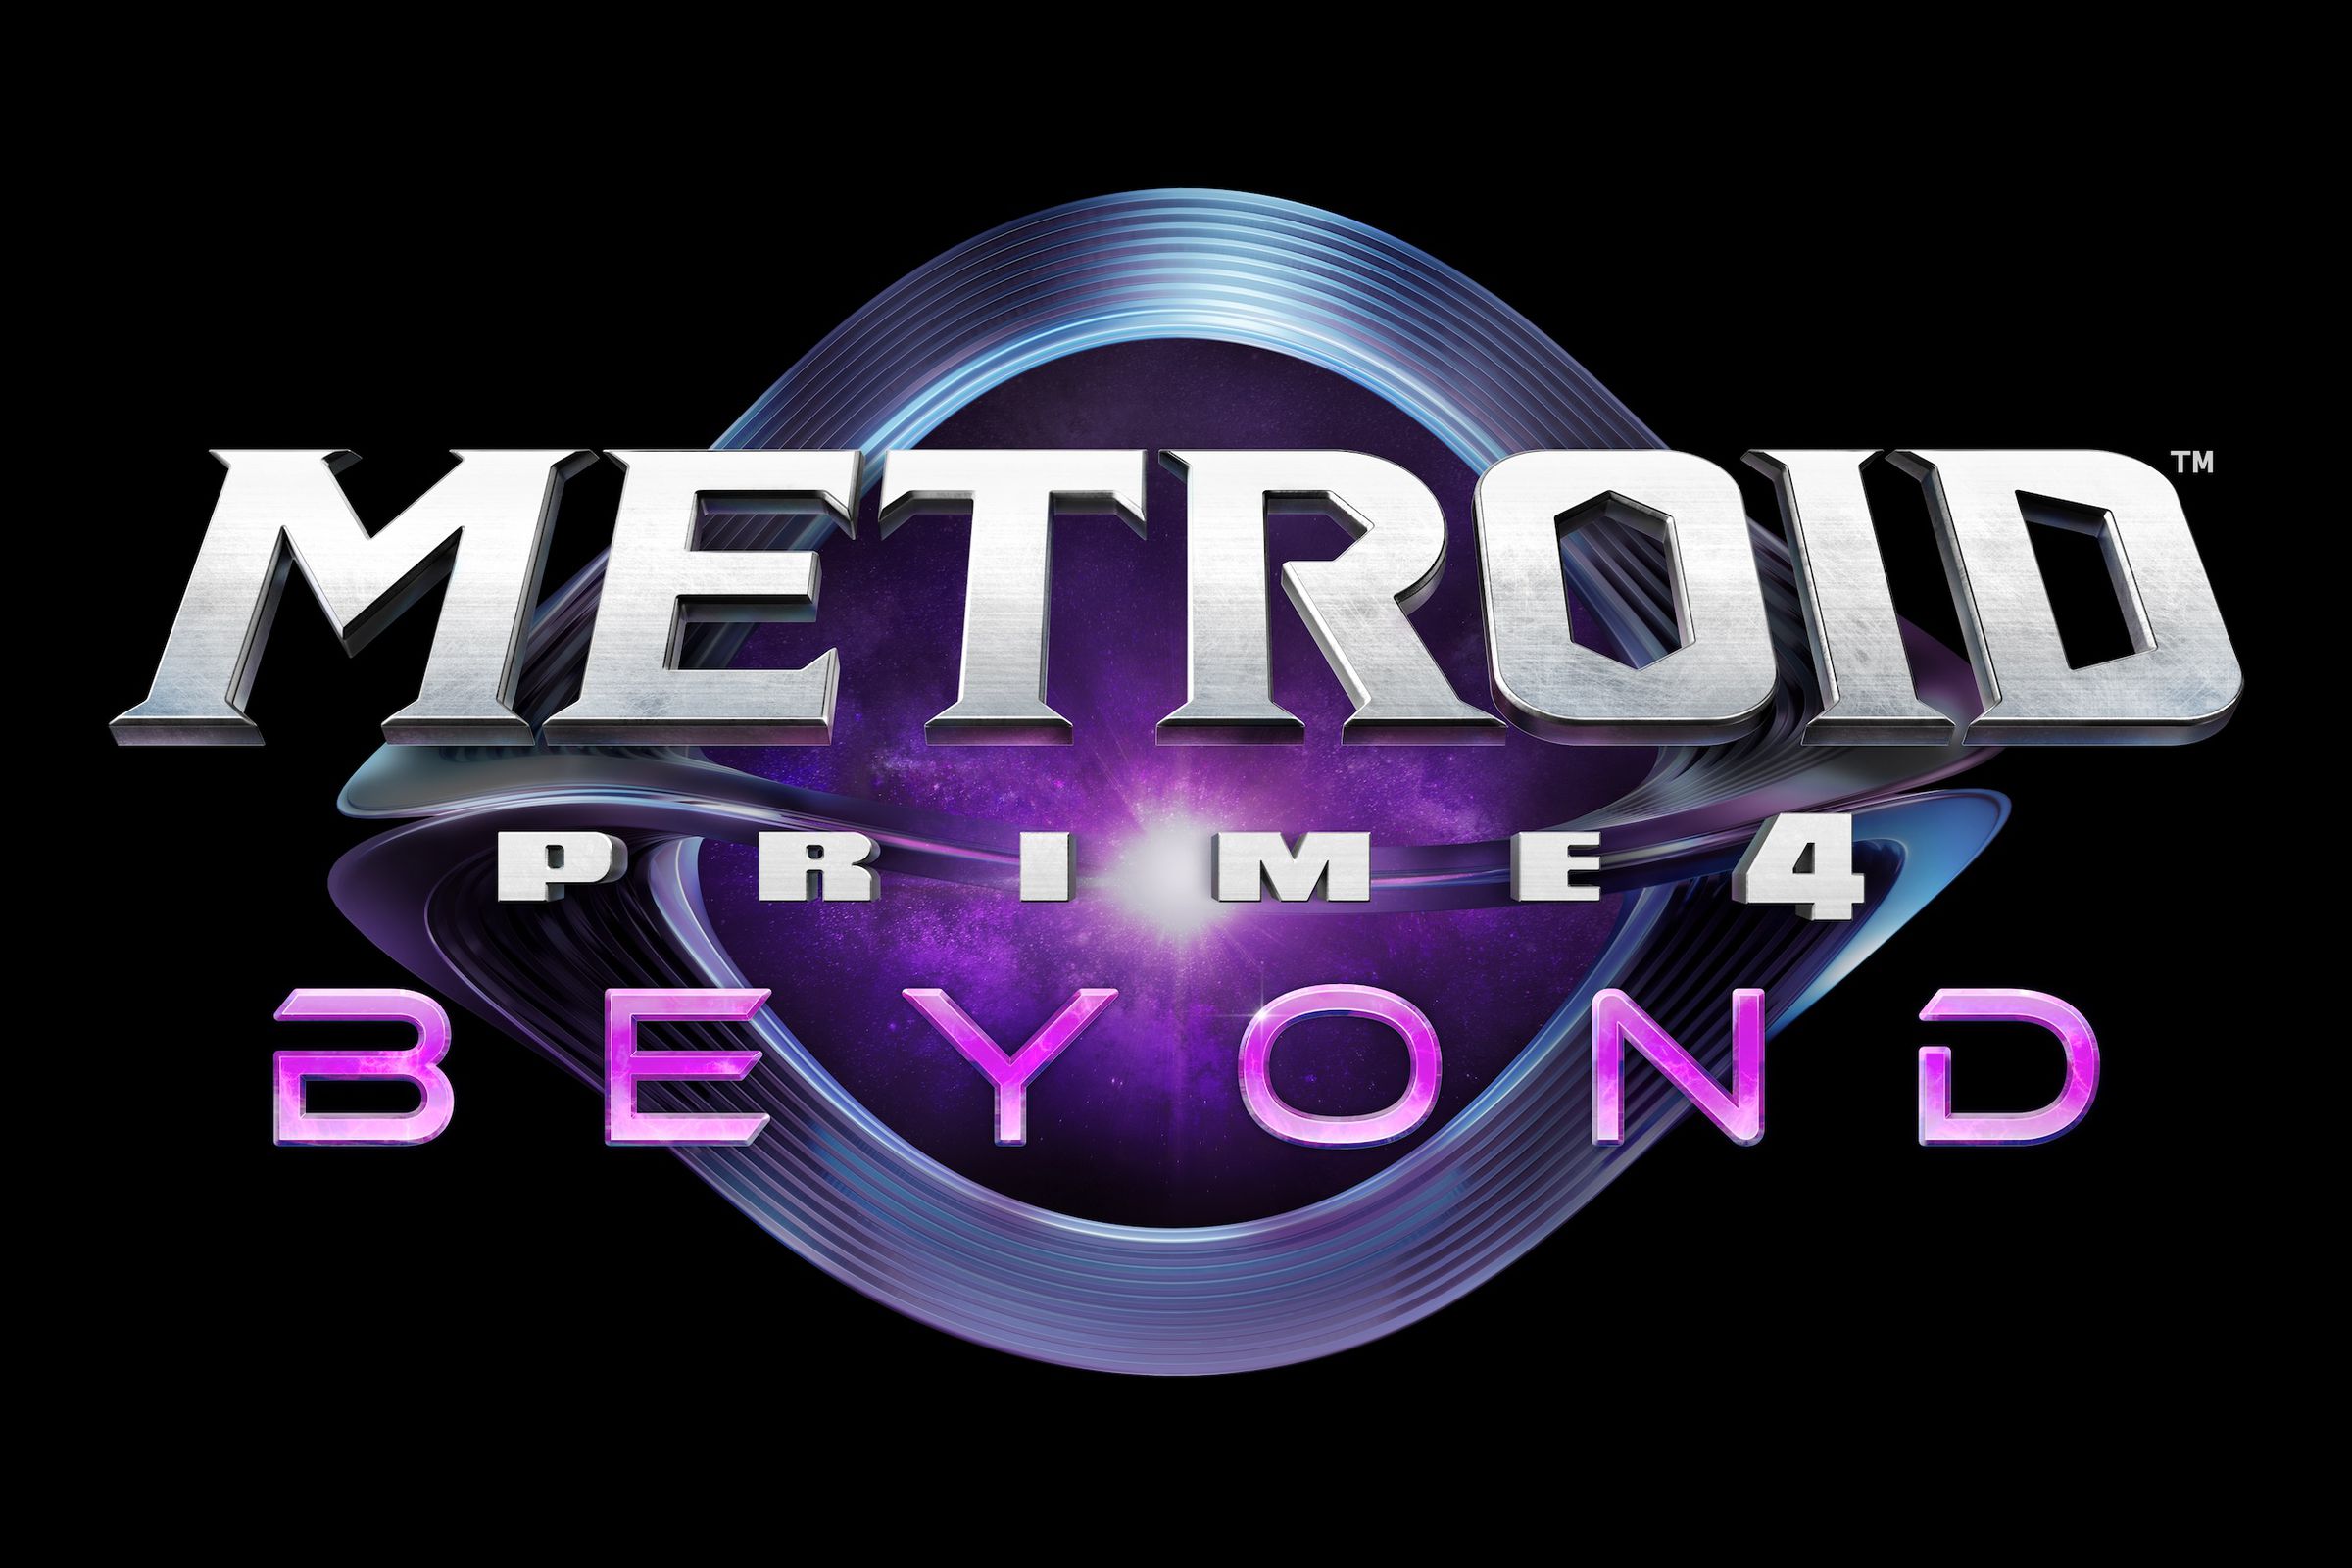 The logo for Metroid Prime 4: Beyond.